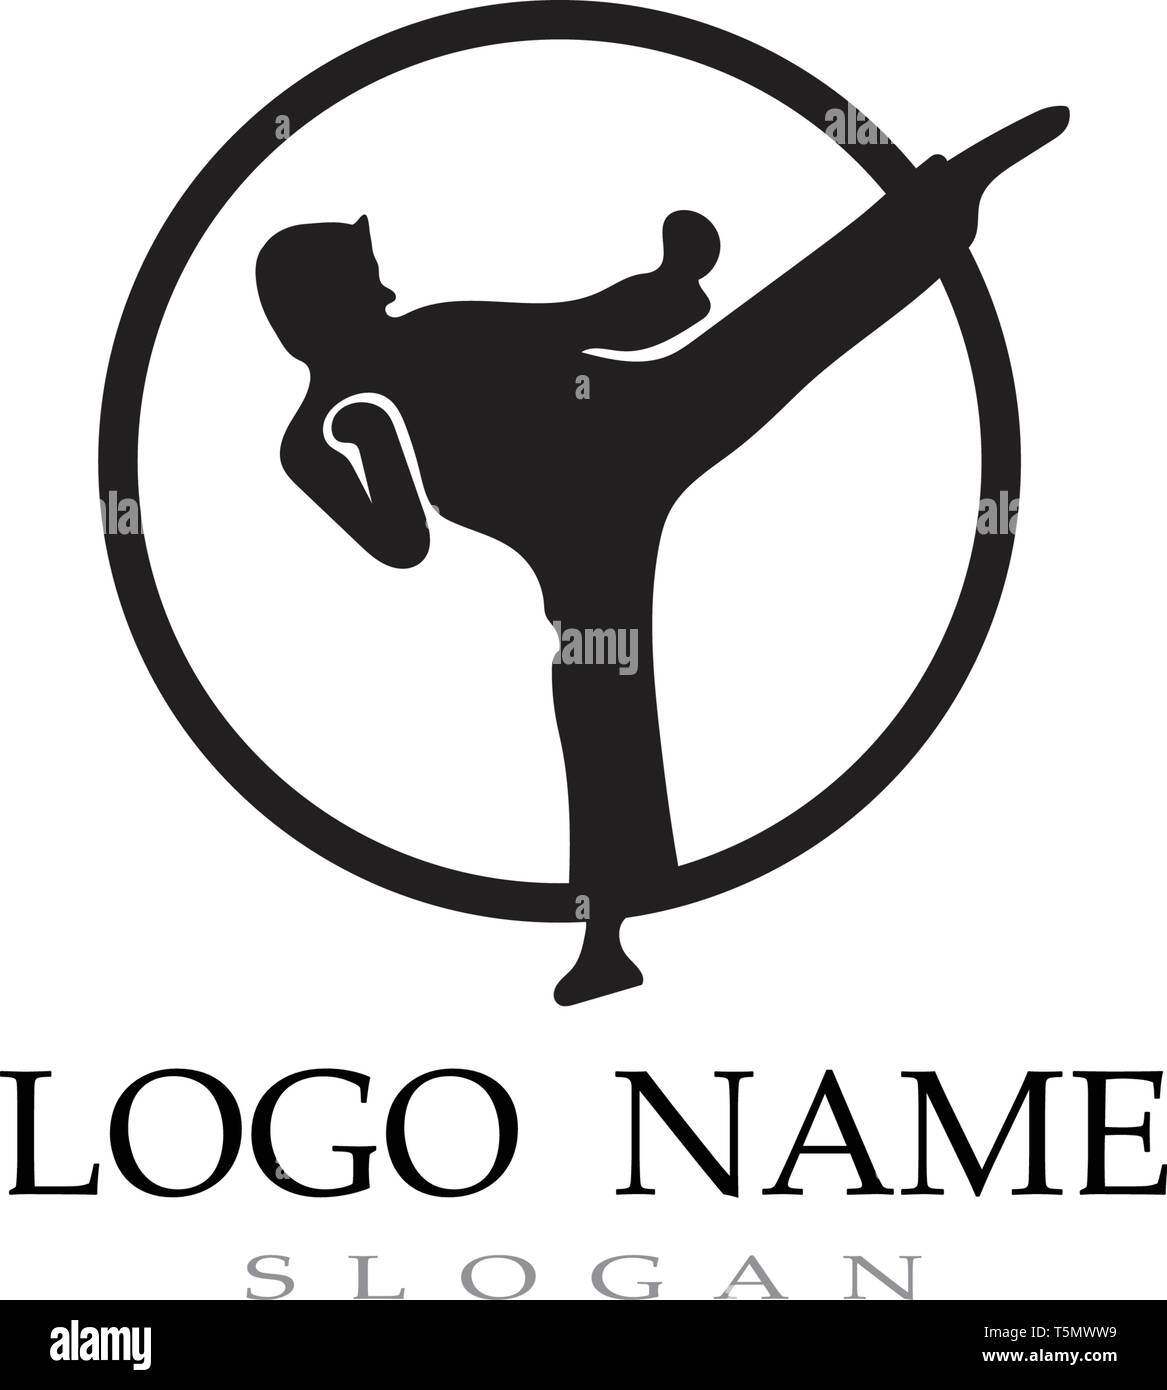 taekwondo logos